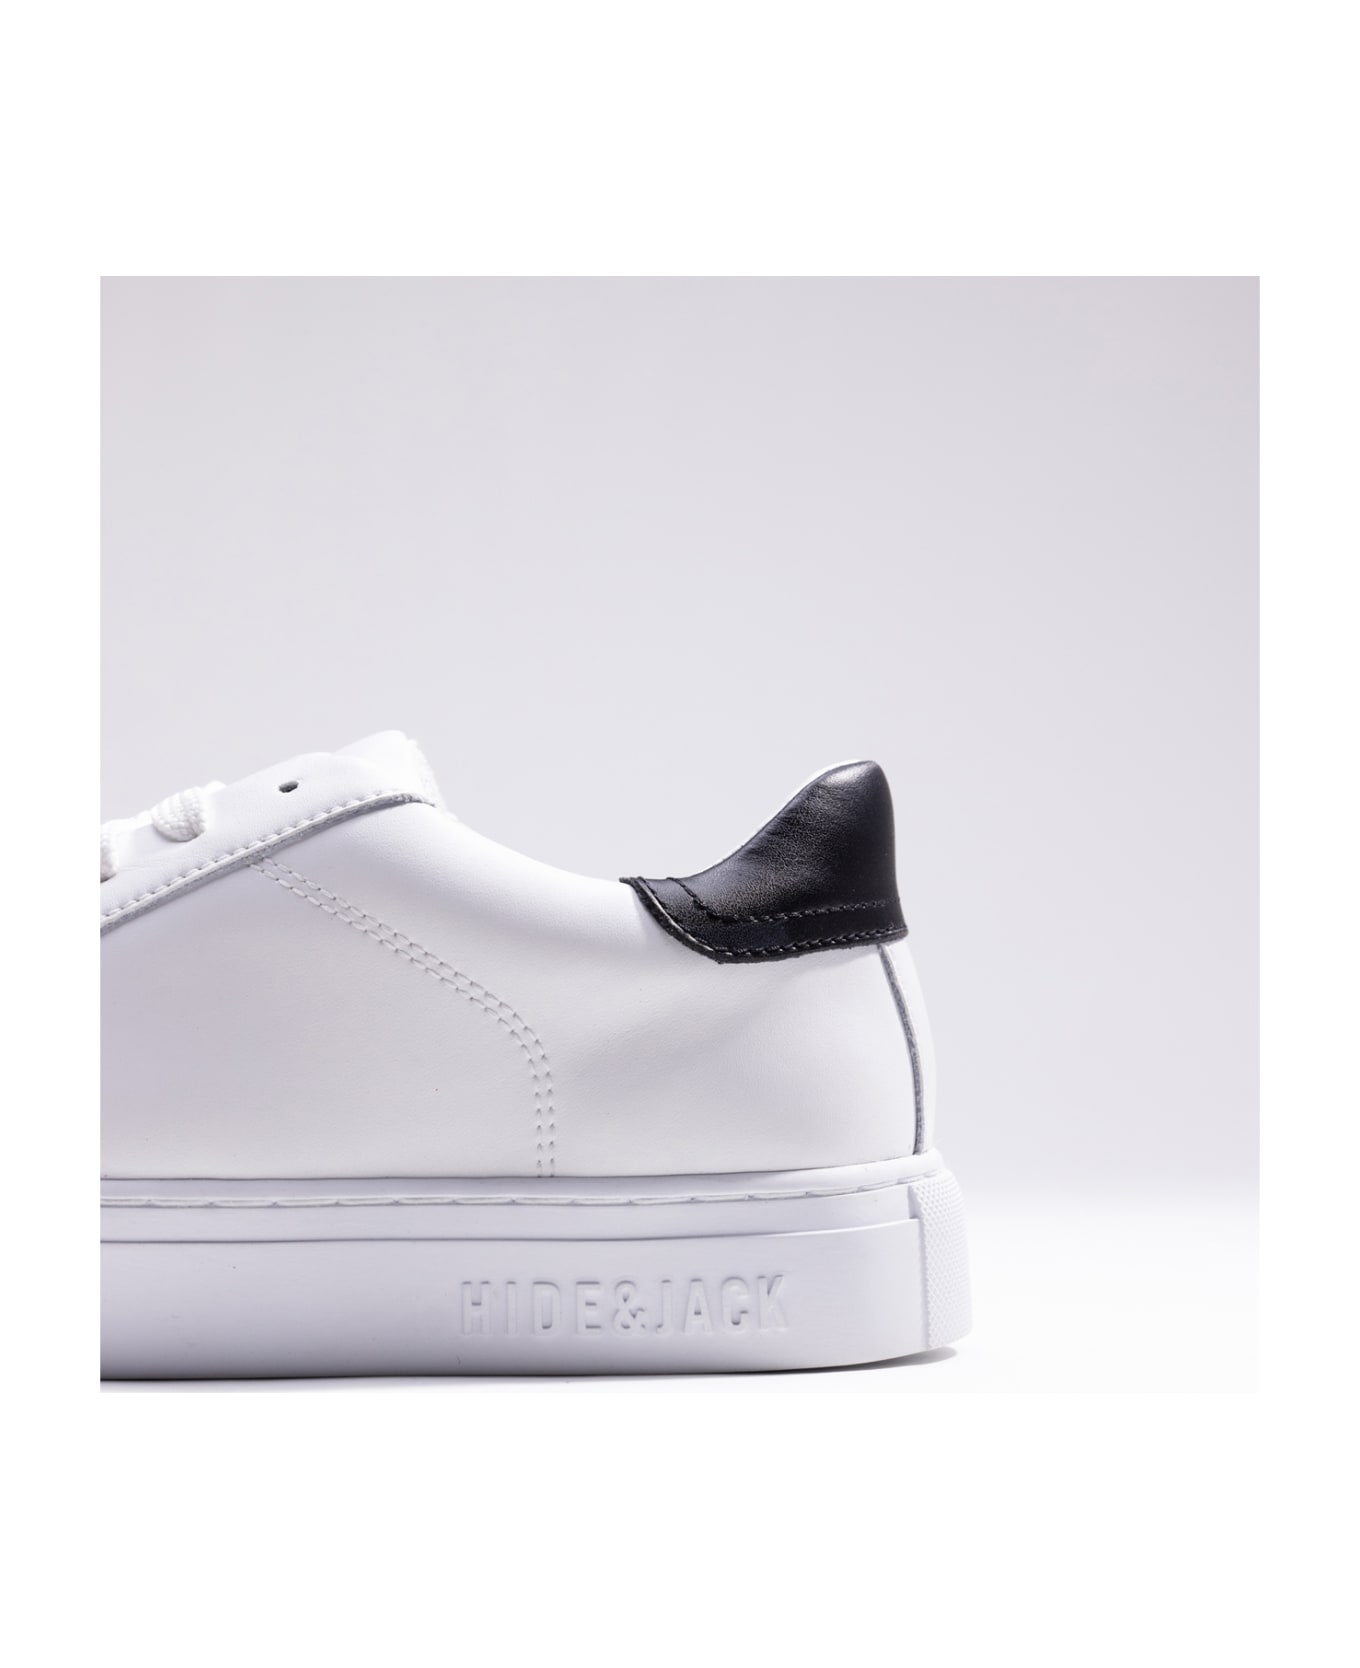 Hide&Jack Low Top Sneaker - Essence Sky Black White